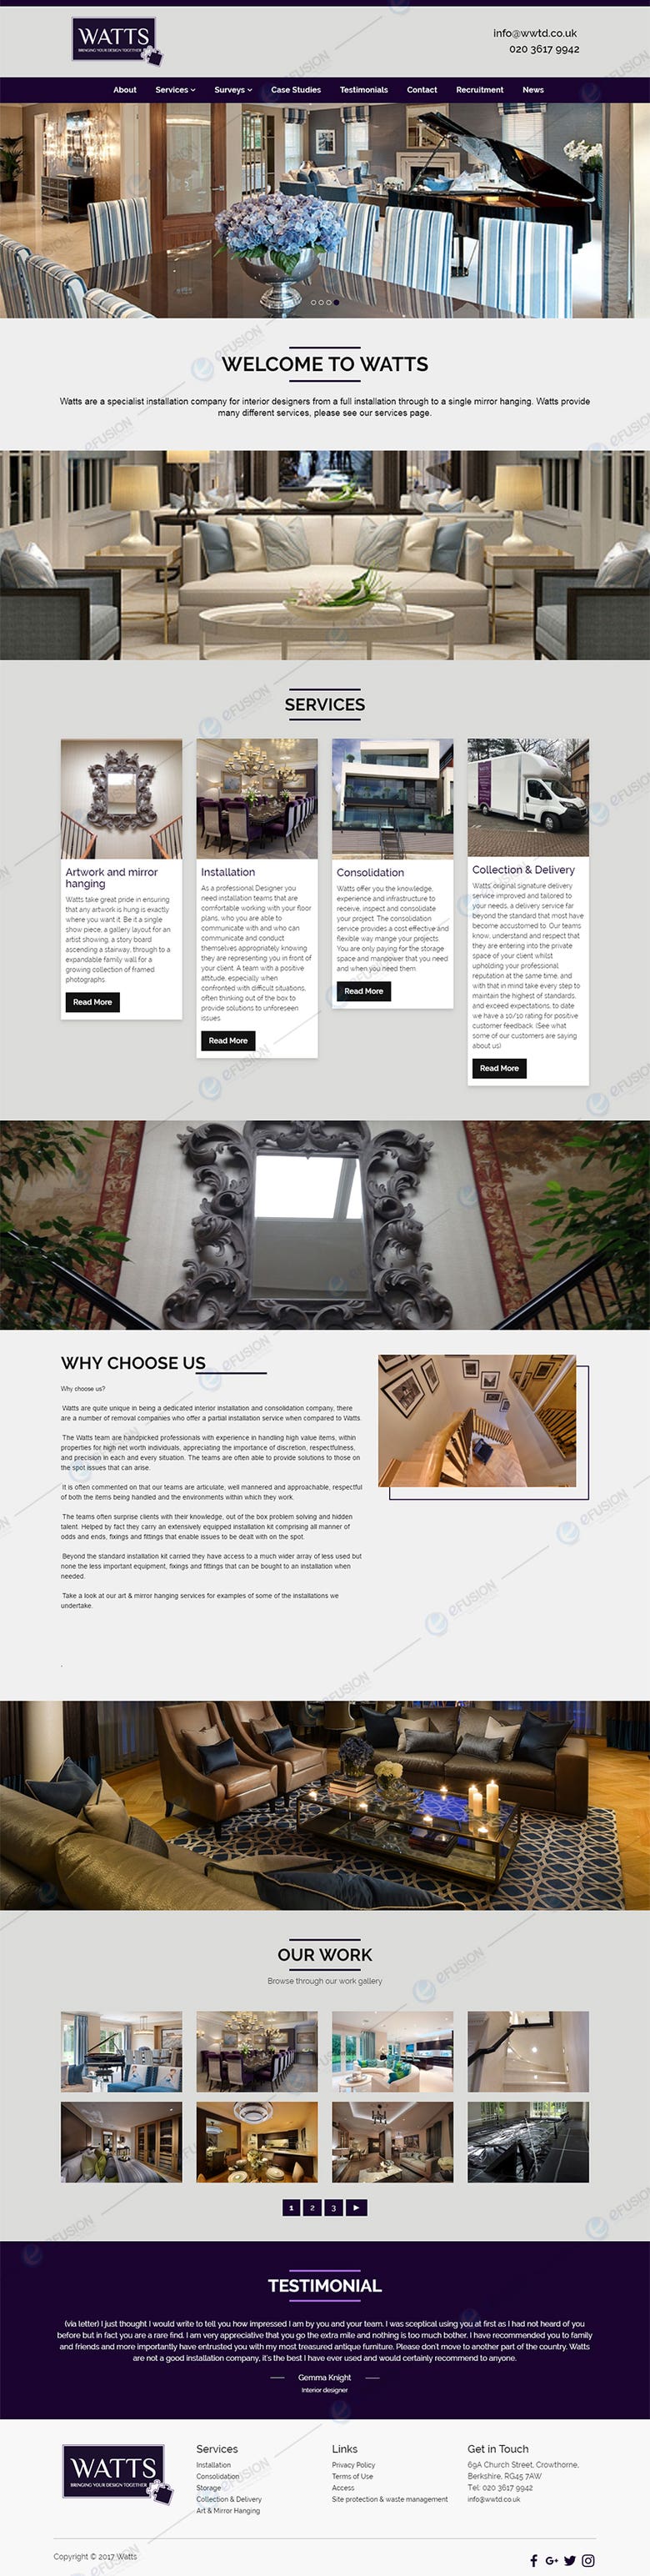 Interior Designing Company Profile | WordPress